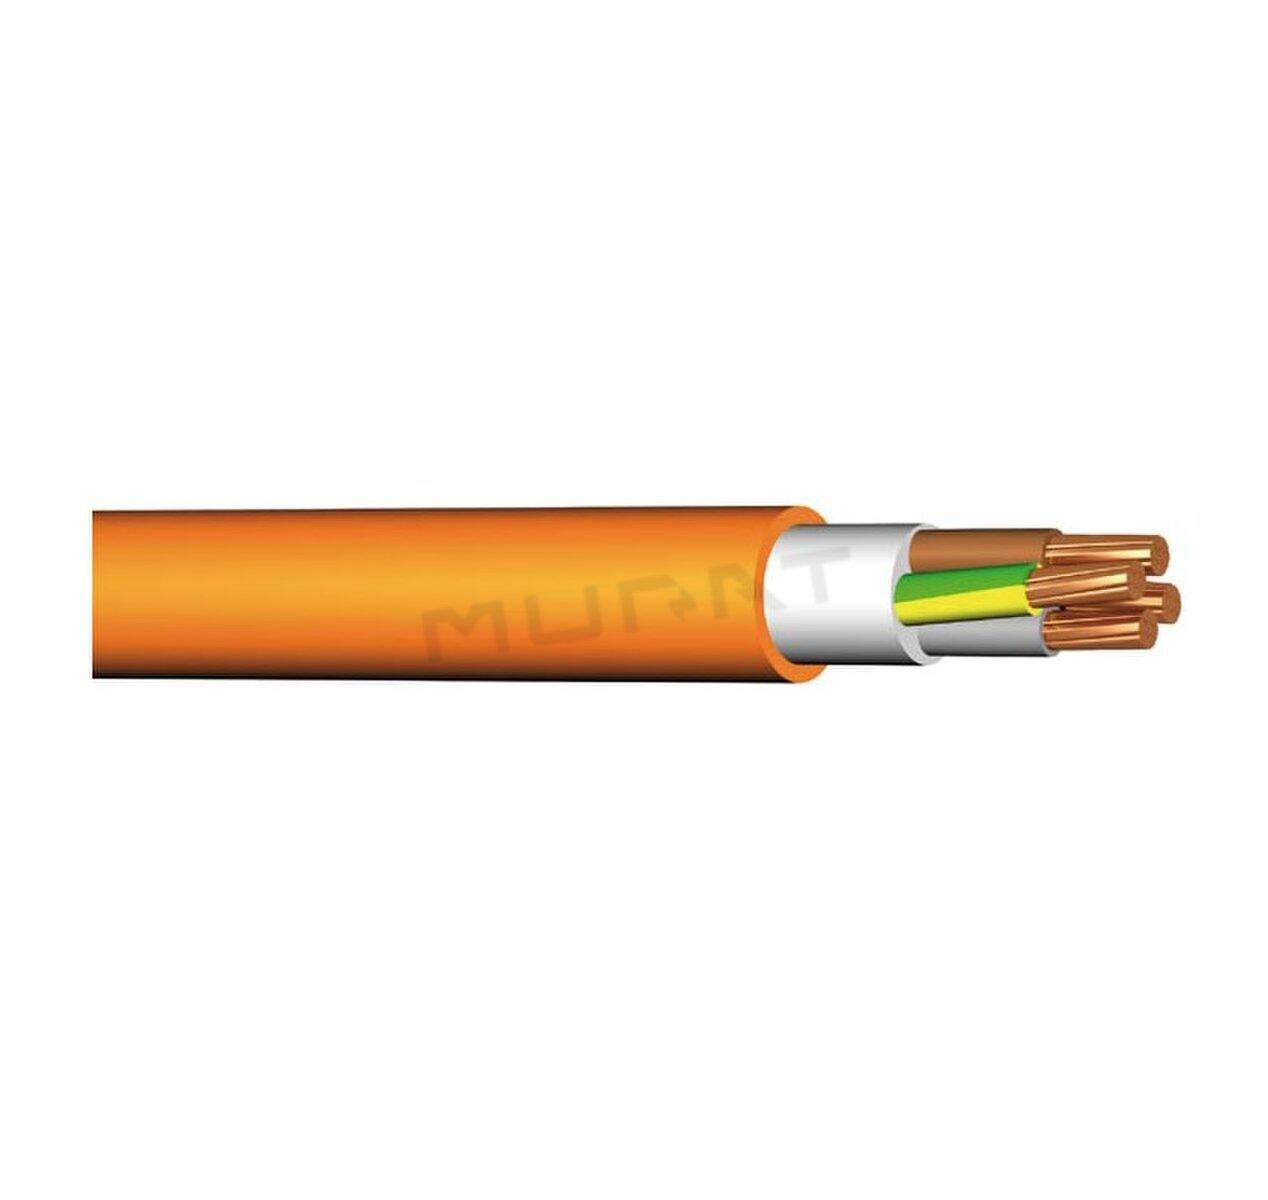 Kábel PRAFlaSafe X-J 1x70 mm2 RM B2ca s1d1a1